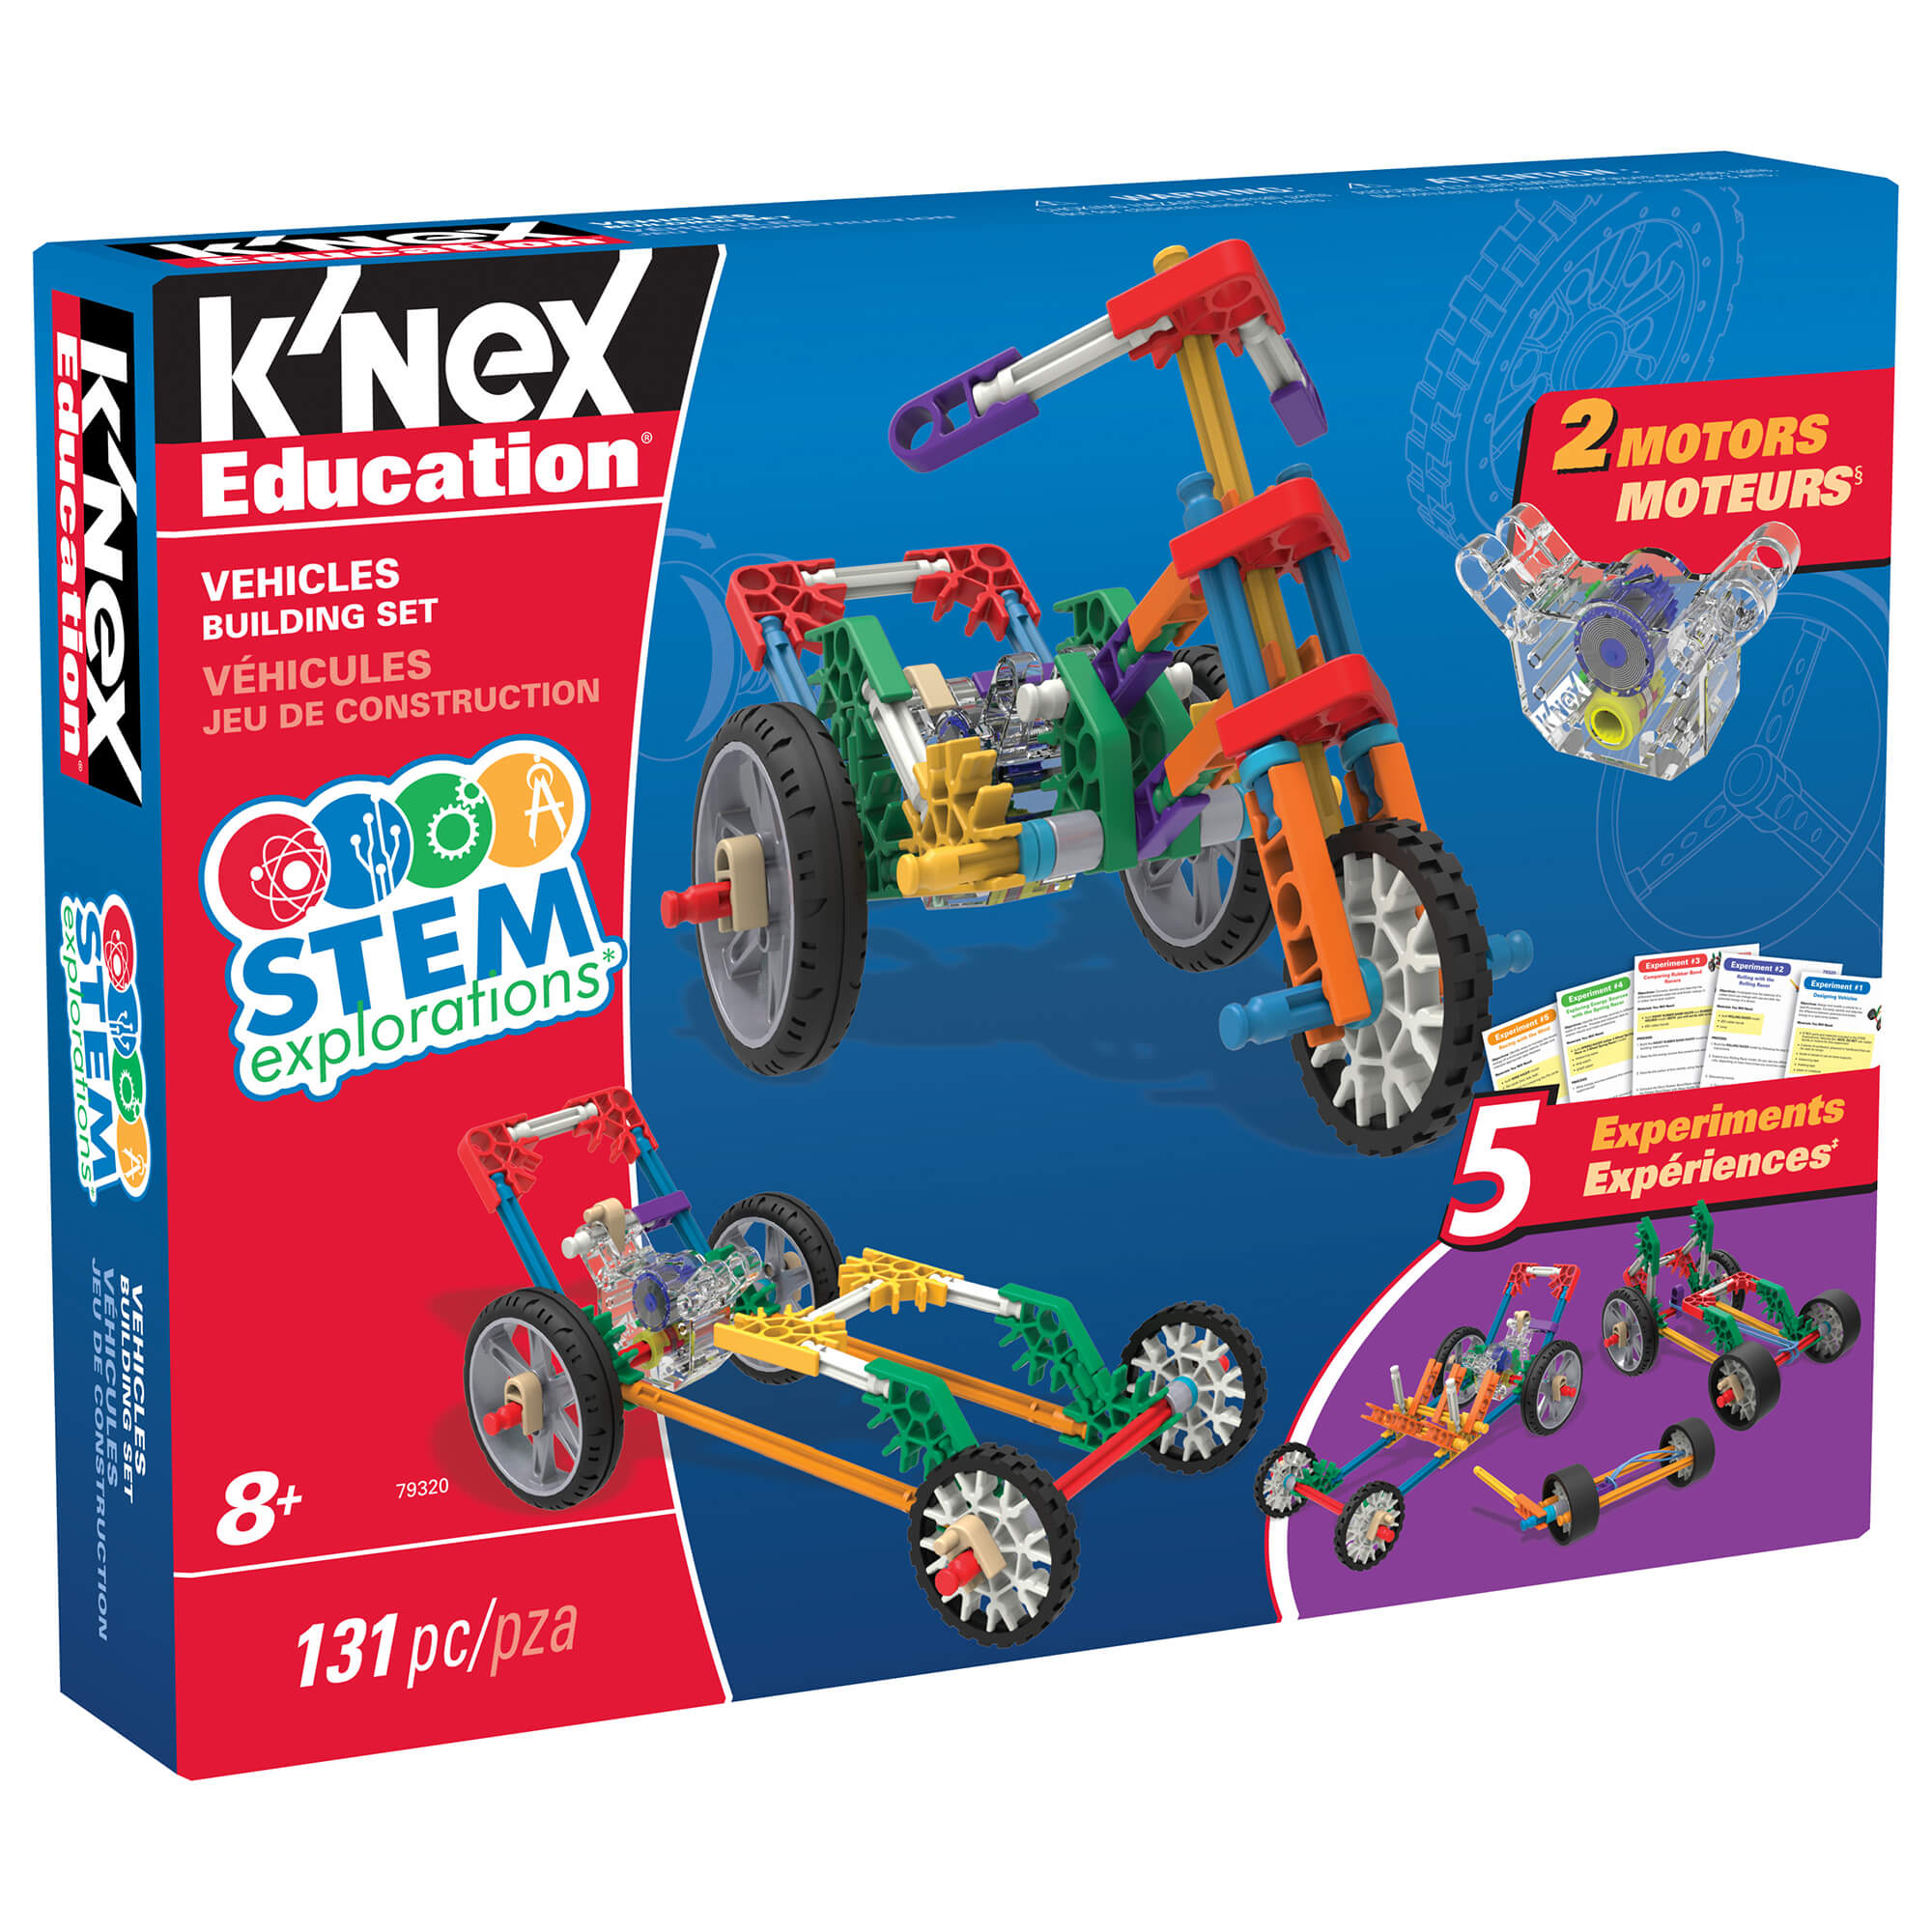 K'NEX Education STEM Explorations: Vehicles Building Set